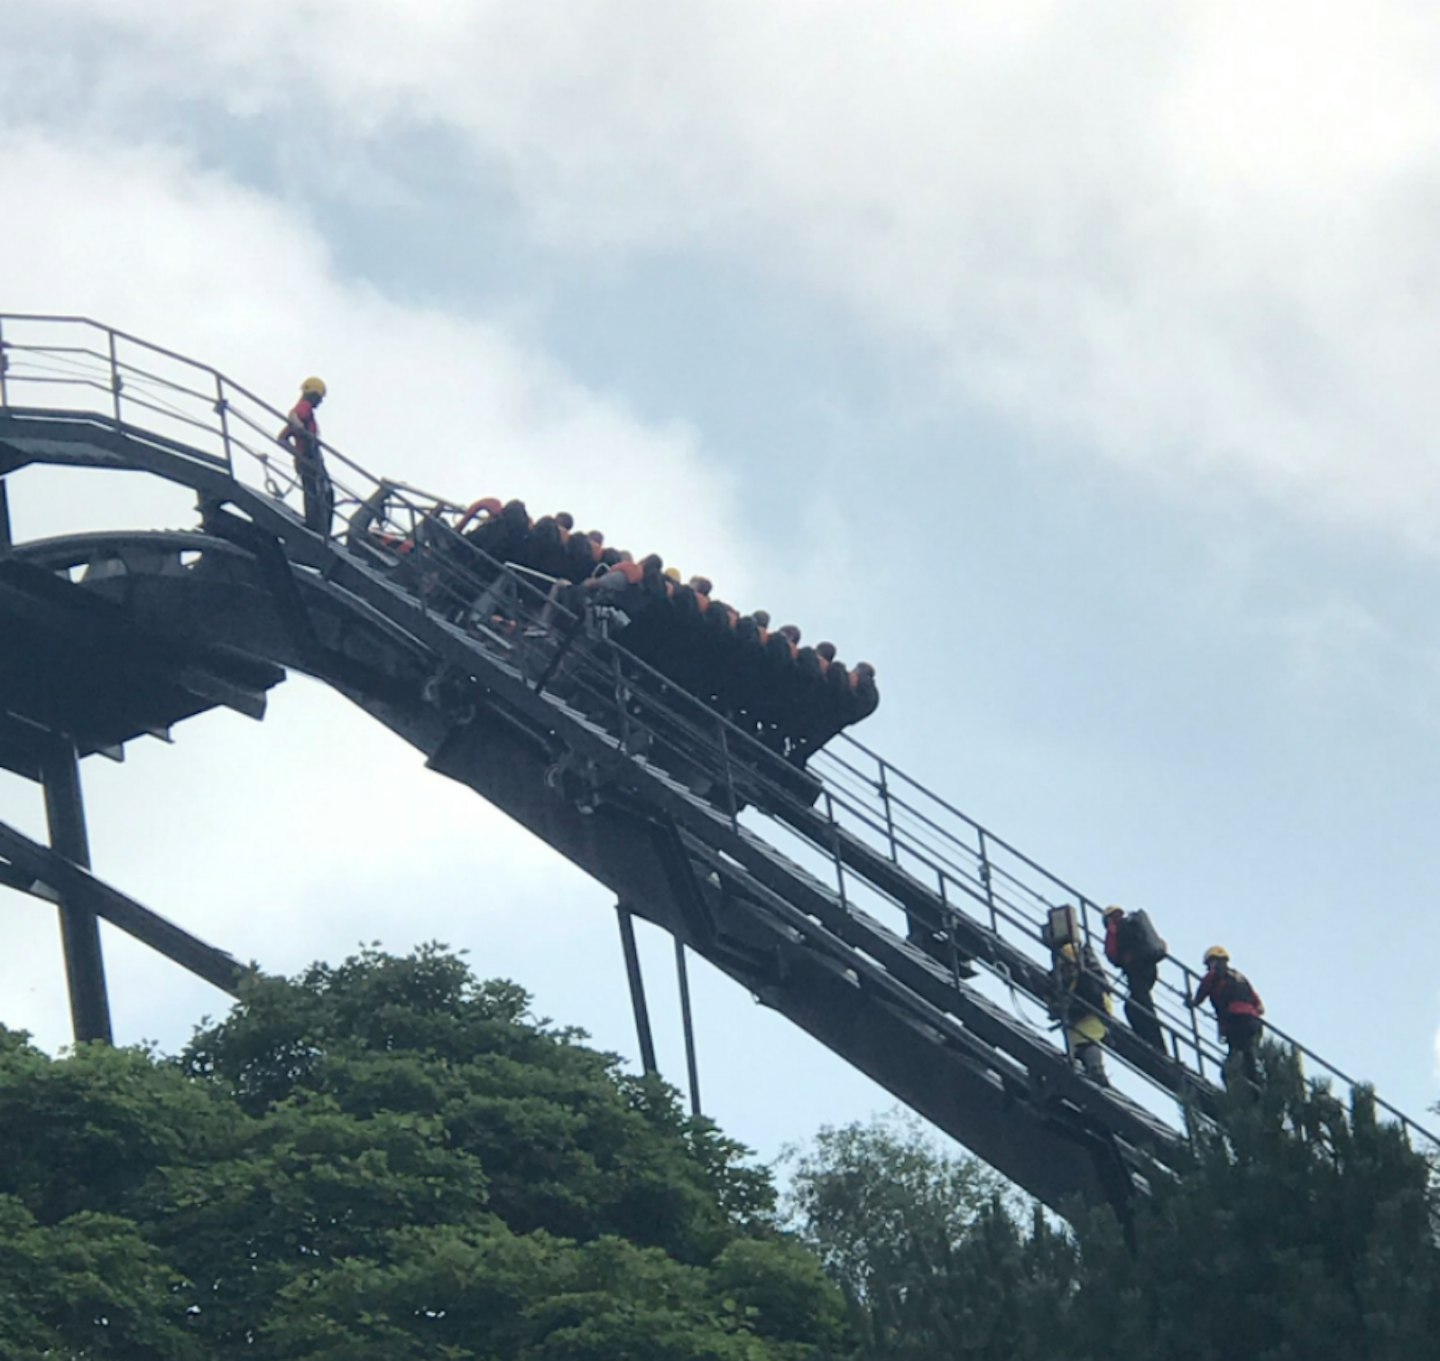 Alton Towers Oblivion roller coaster ride